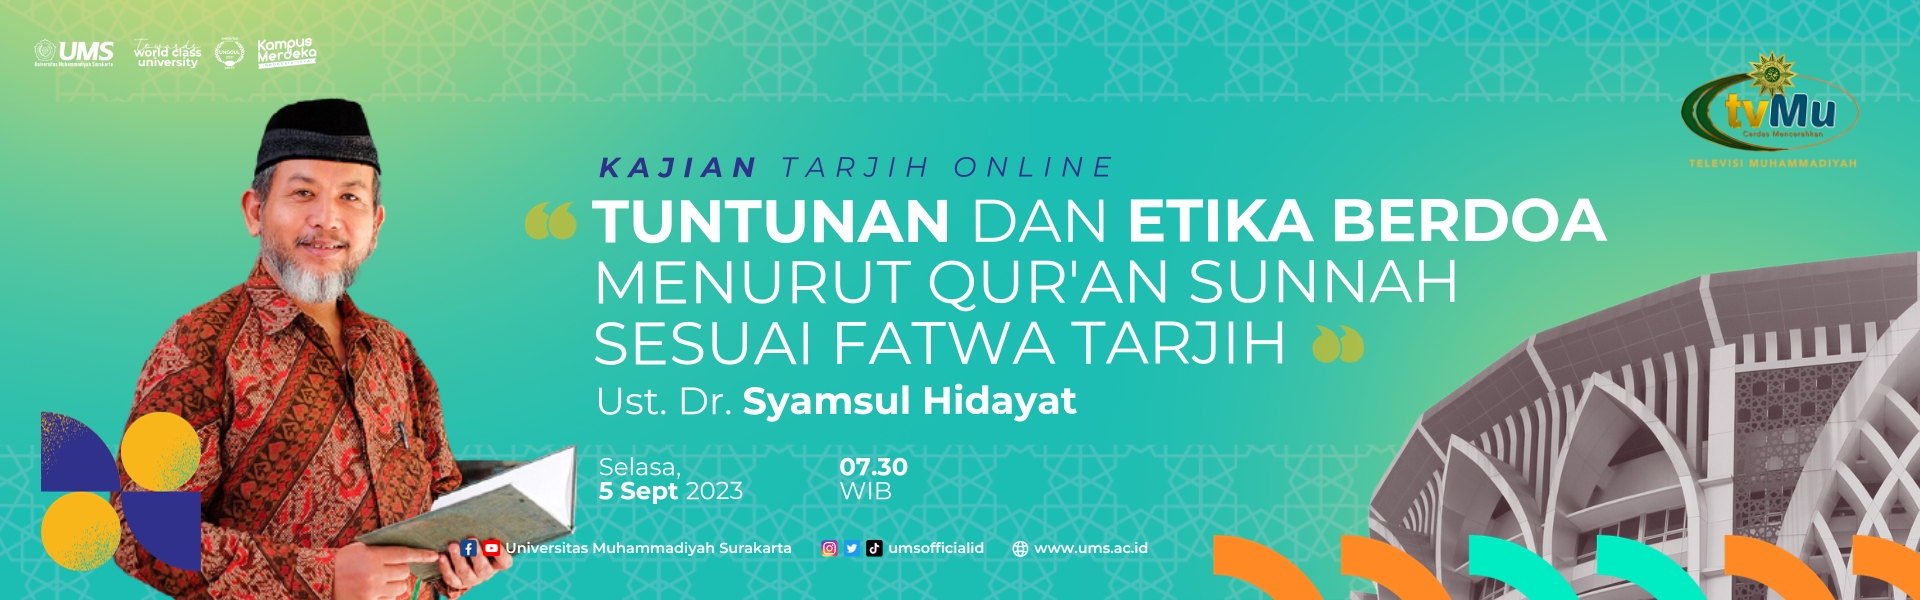 You are currently viewing Kajian Tarjih Online UMS : Tuntunan dan Etika Berdoa Menurut Qur’an Sunnah sesuai Fatwa Tarjih